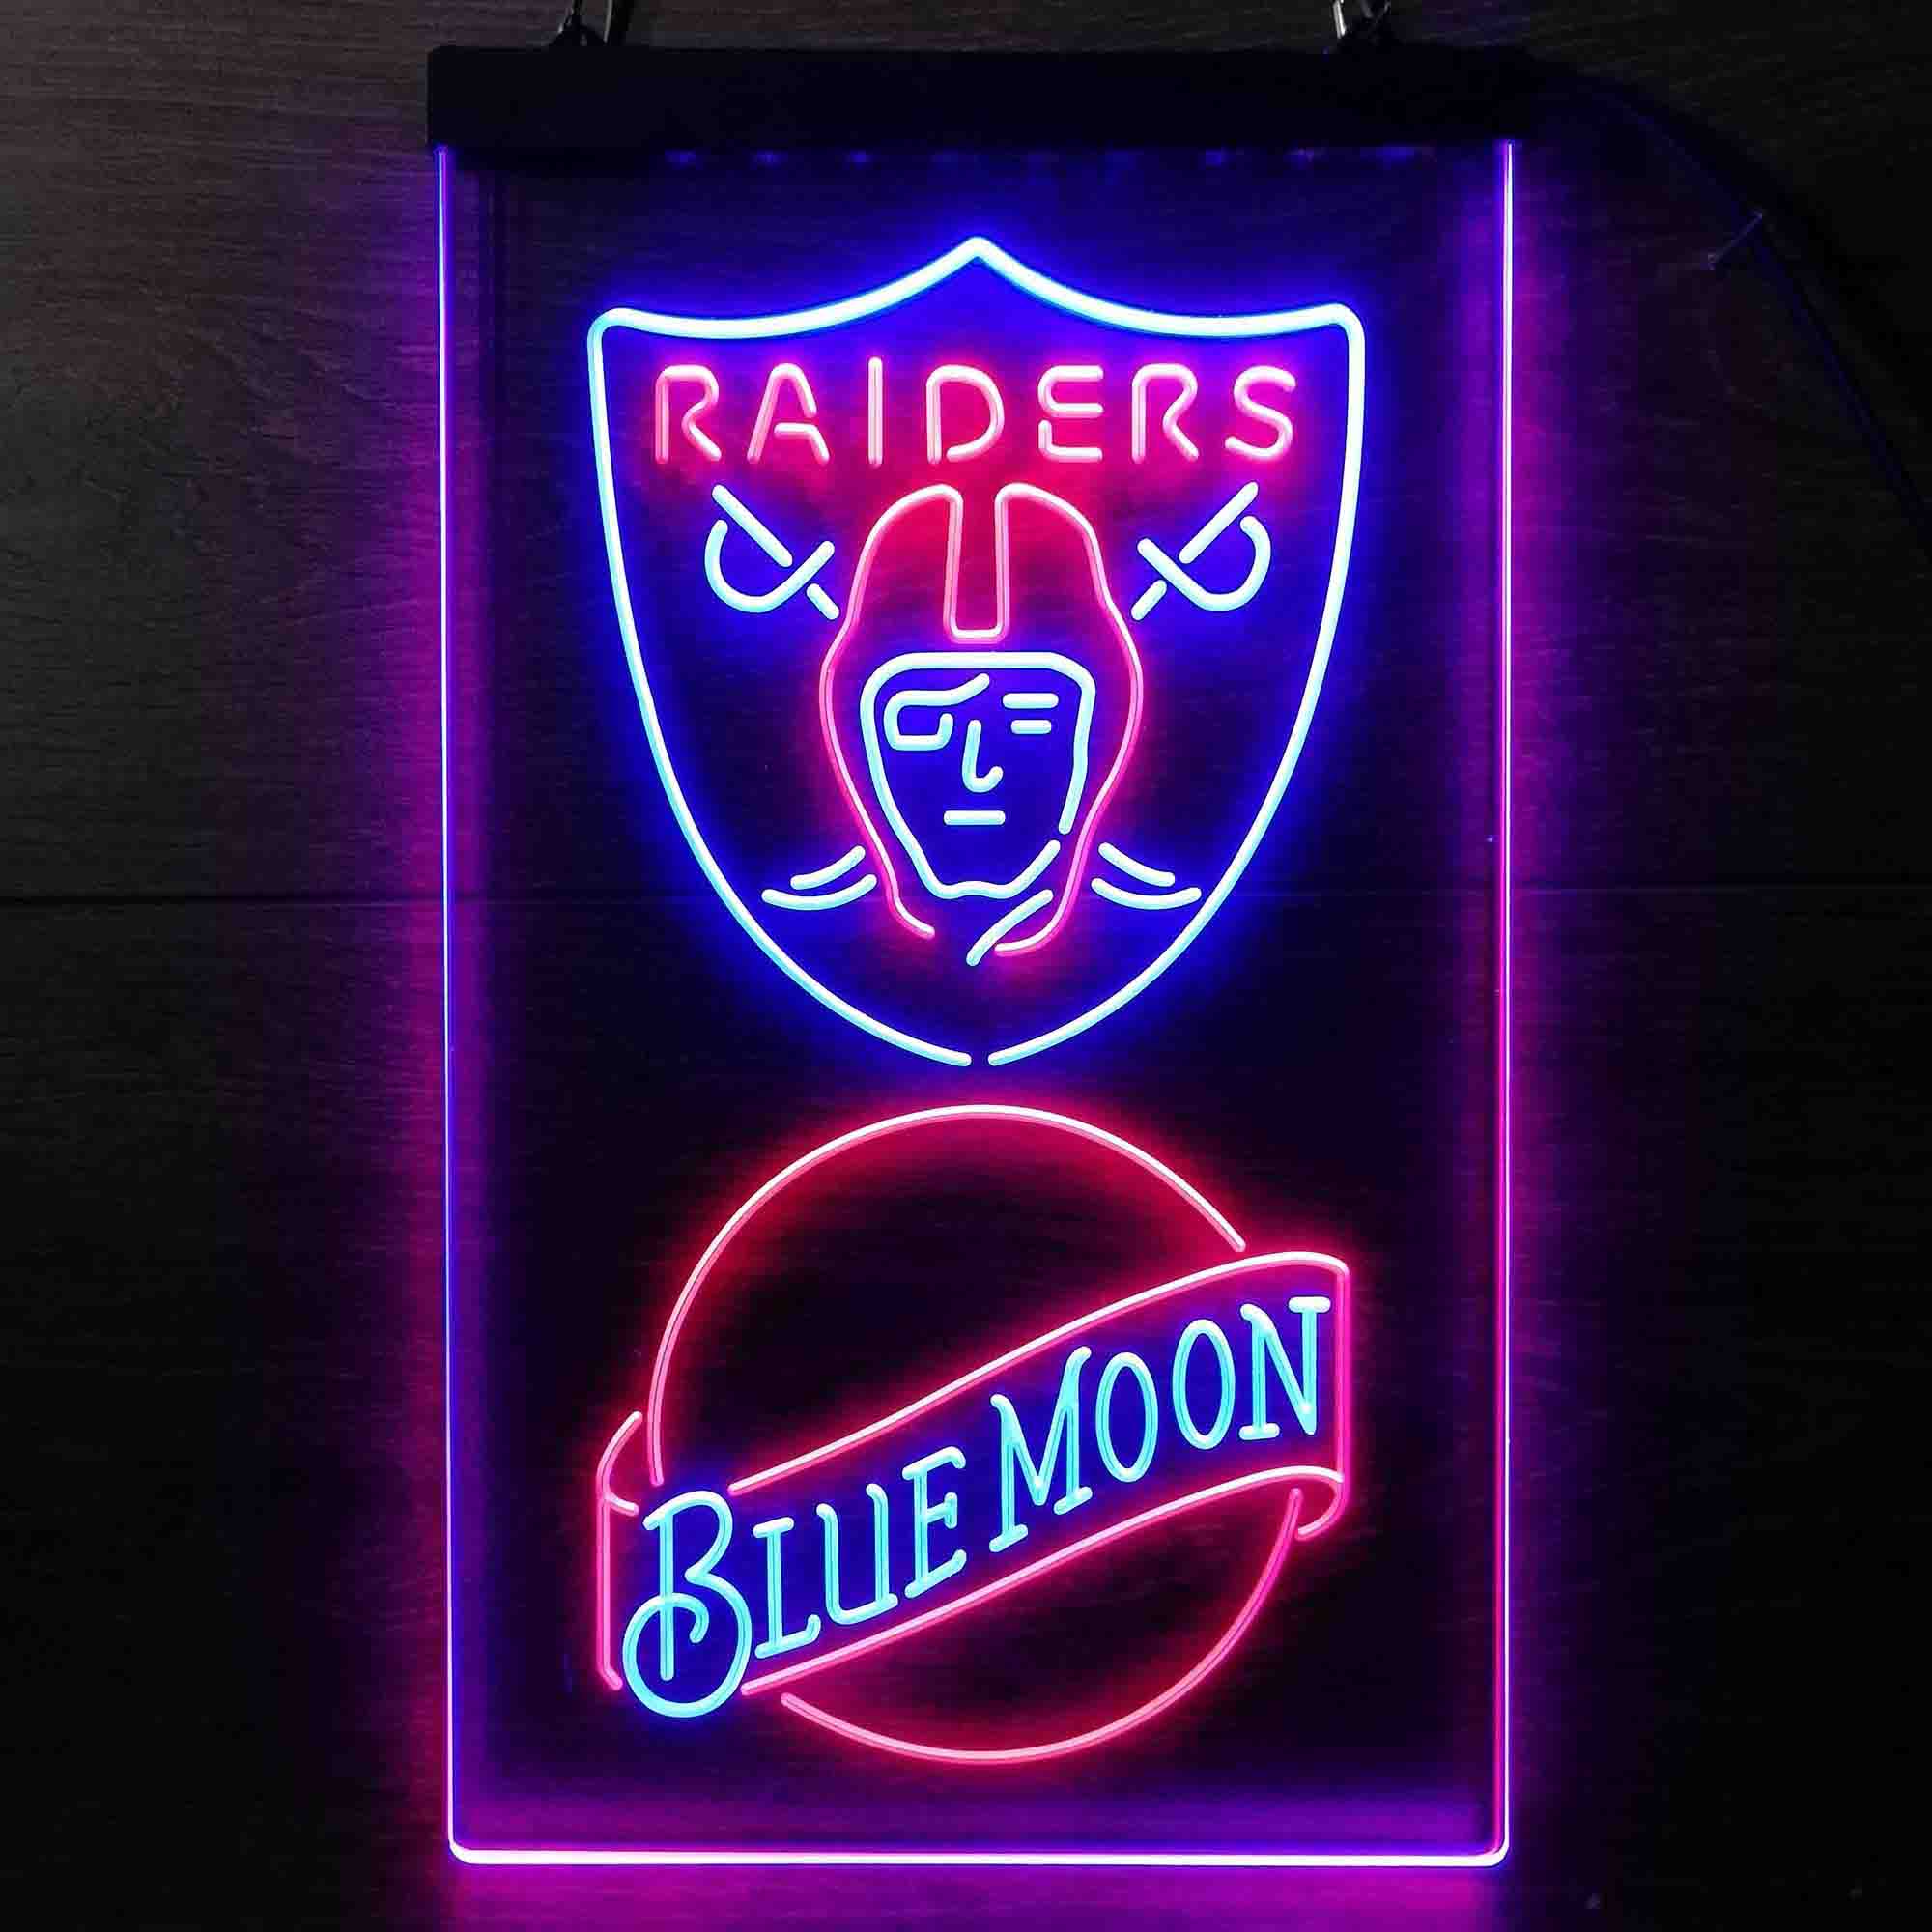 Blue Moon Bar Oakland Raiders Est. 1960 LED Neon Sign